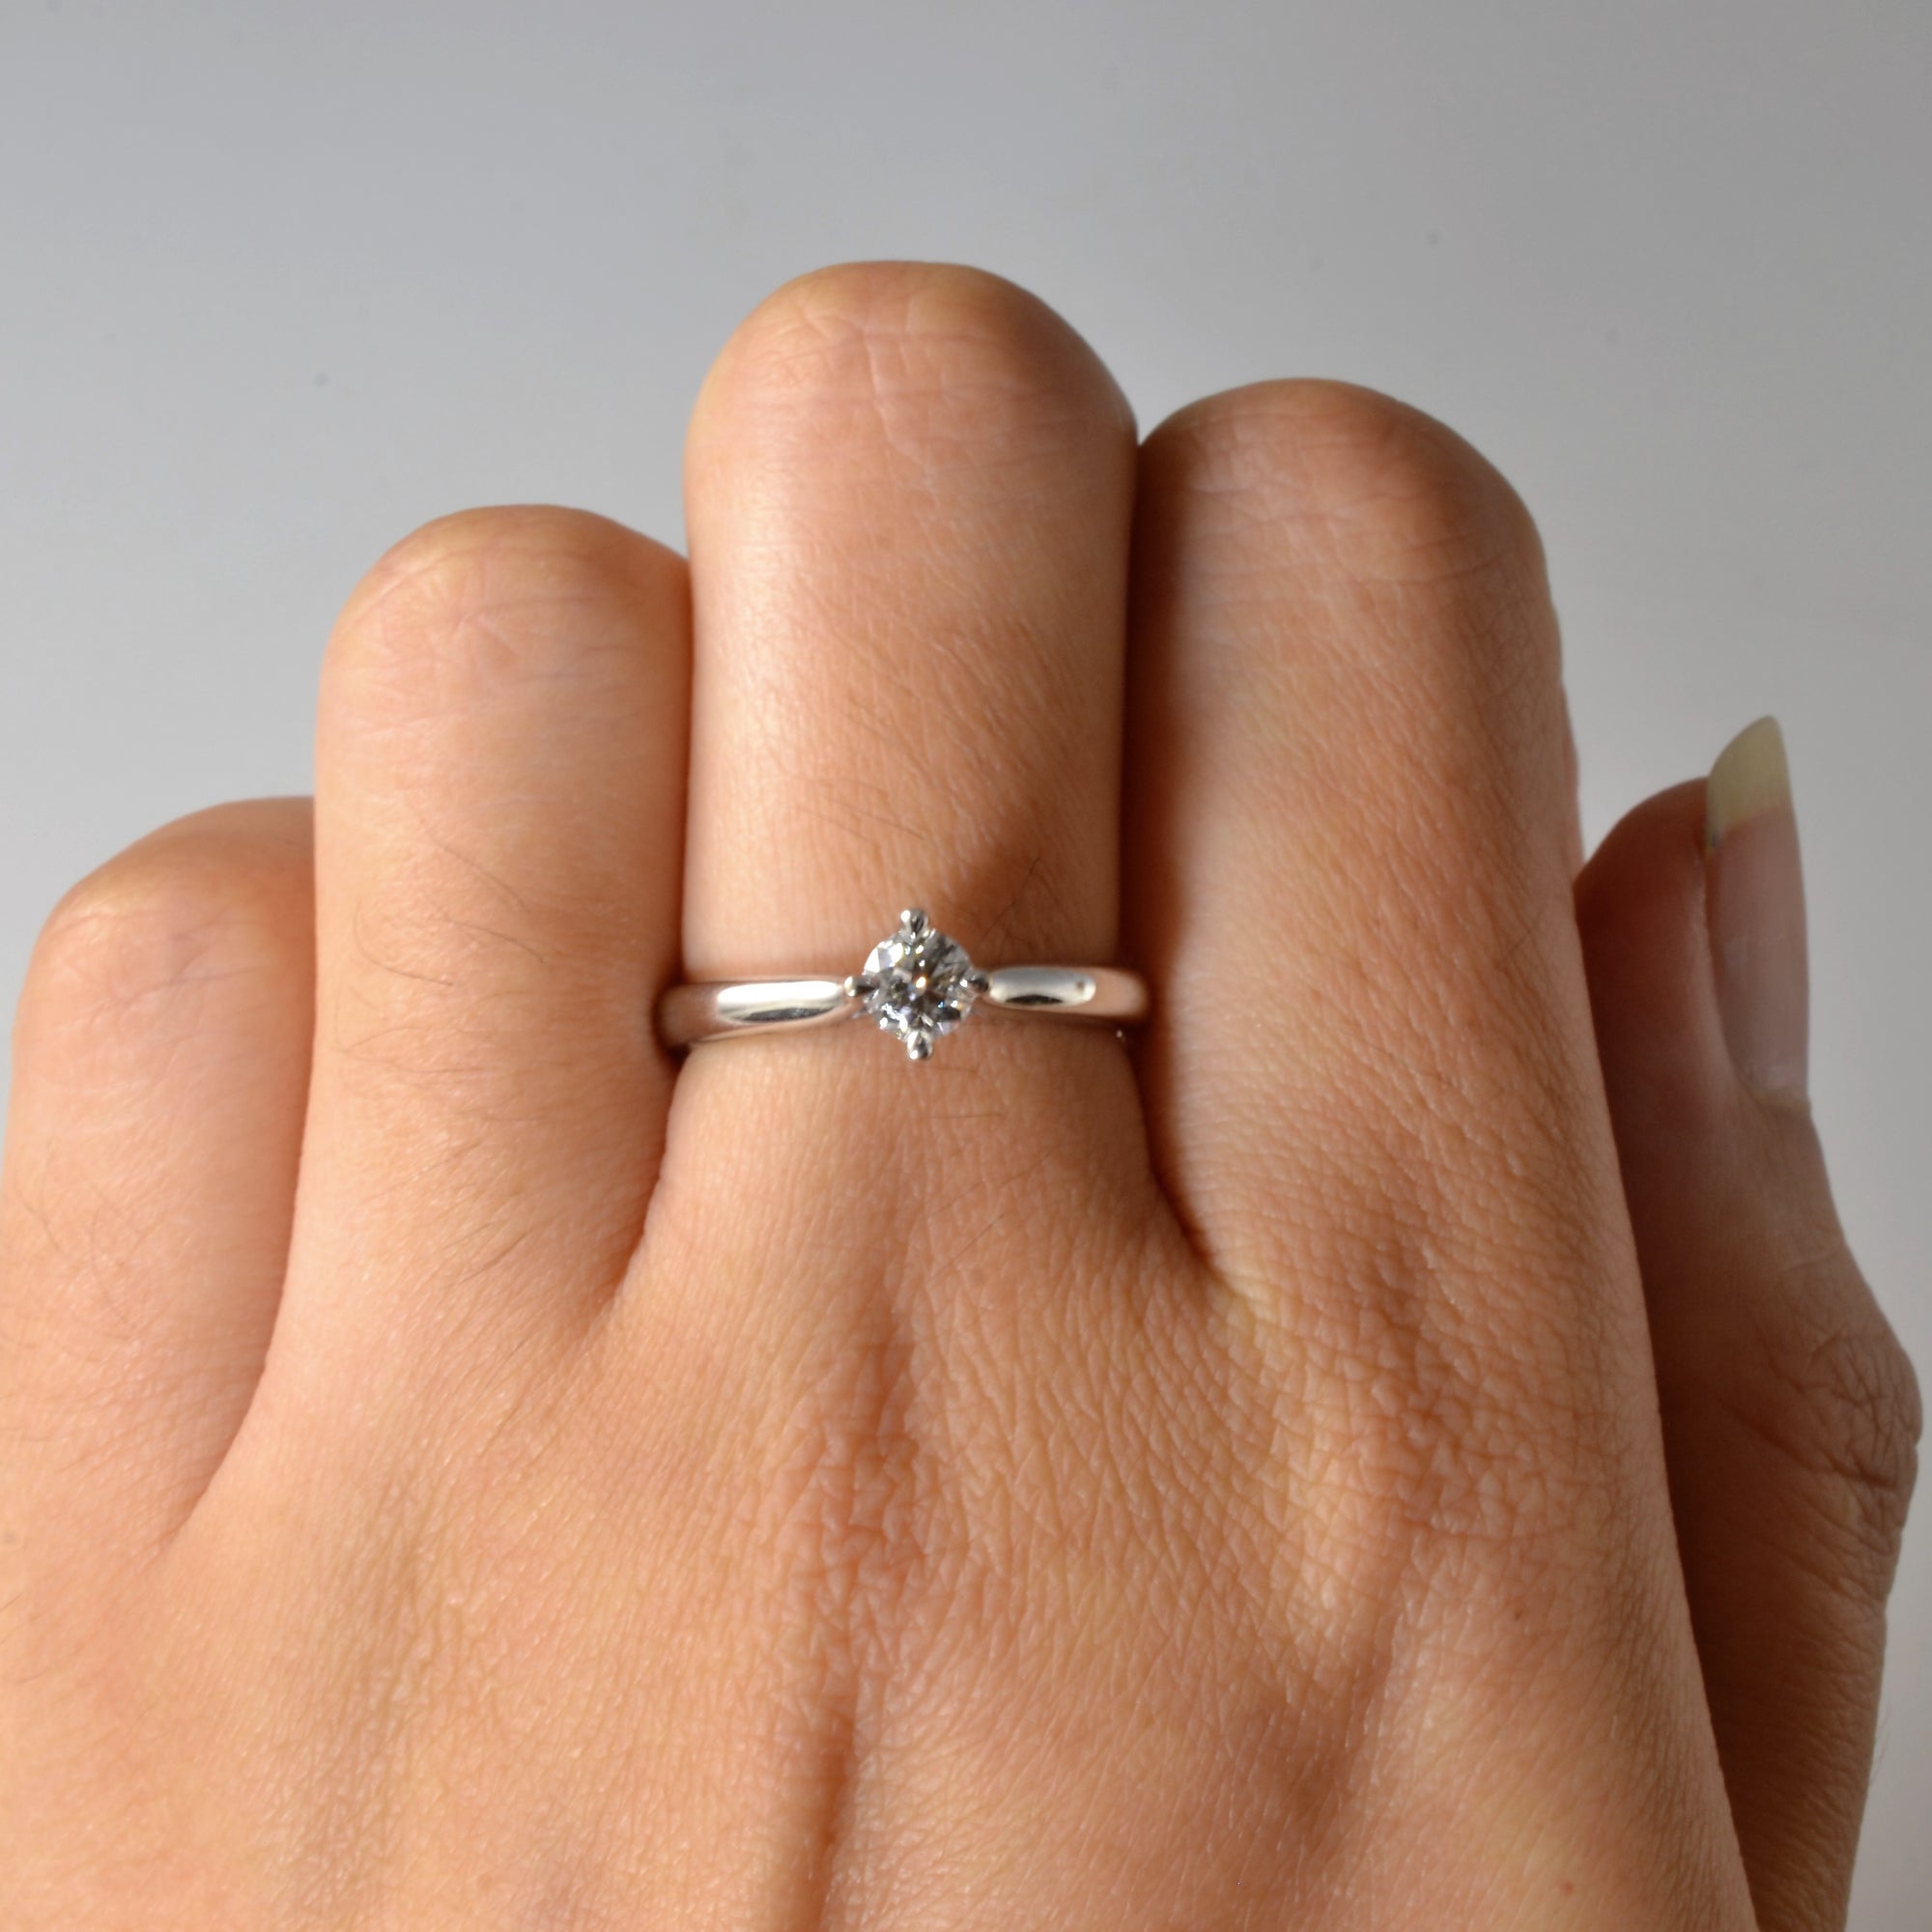 Birks' Nordic Light Diamond Engagement Ring | 0.30ct | SZ 6.25 |